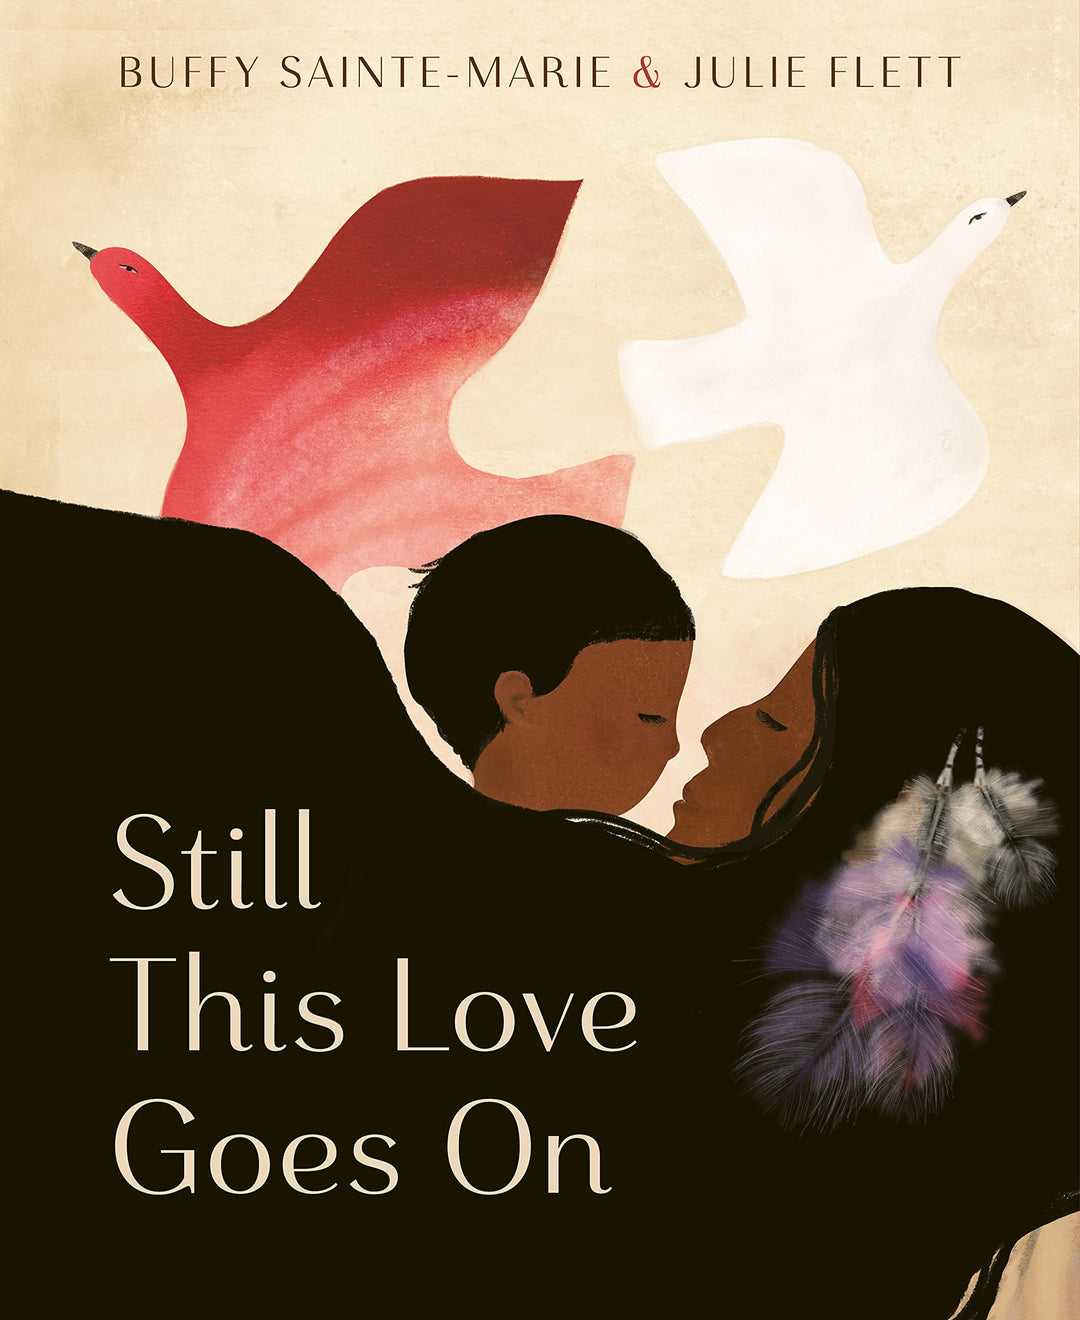 Still This Love Goes On by Buffy Sainte-Marie & Julie Flett